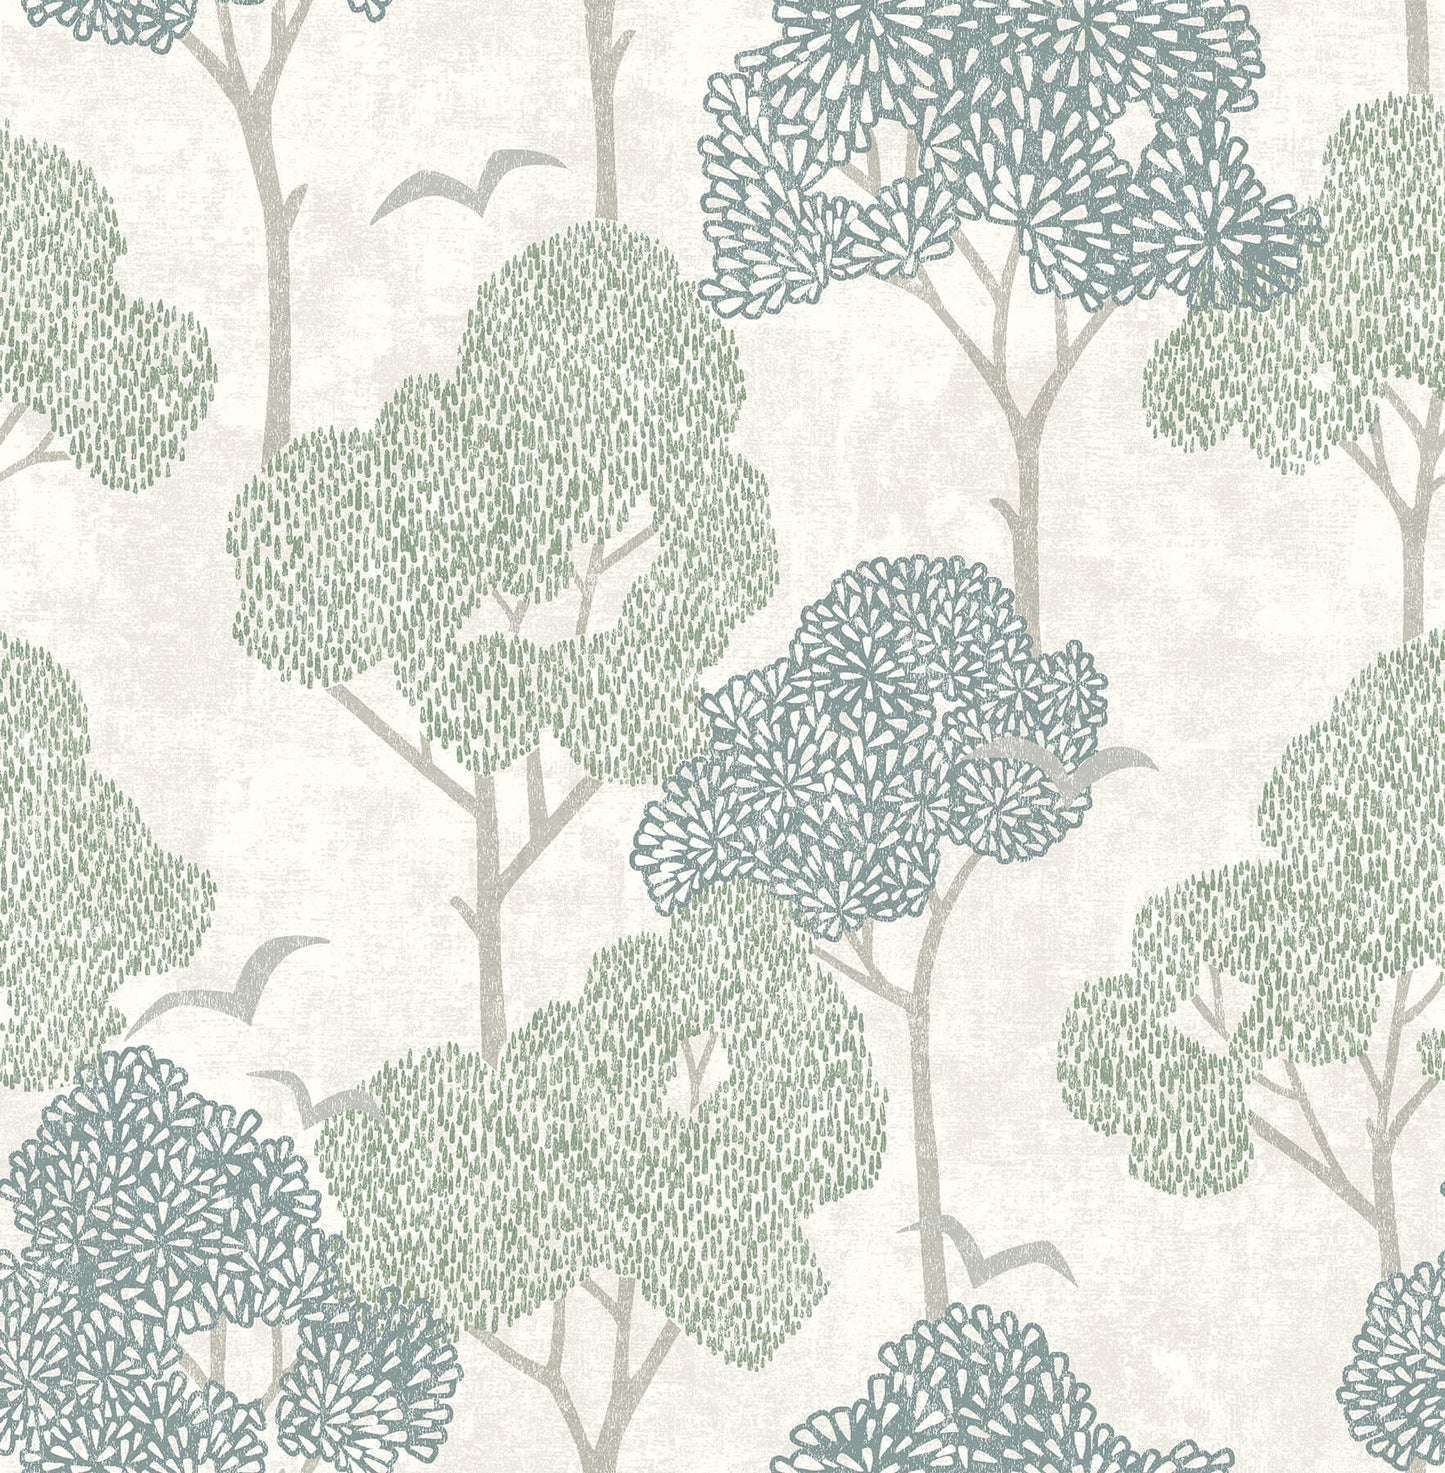 A-Street Prints Hannah Lykke Textured Tree Wallpaper - Green